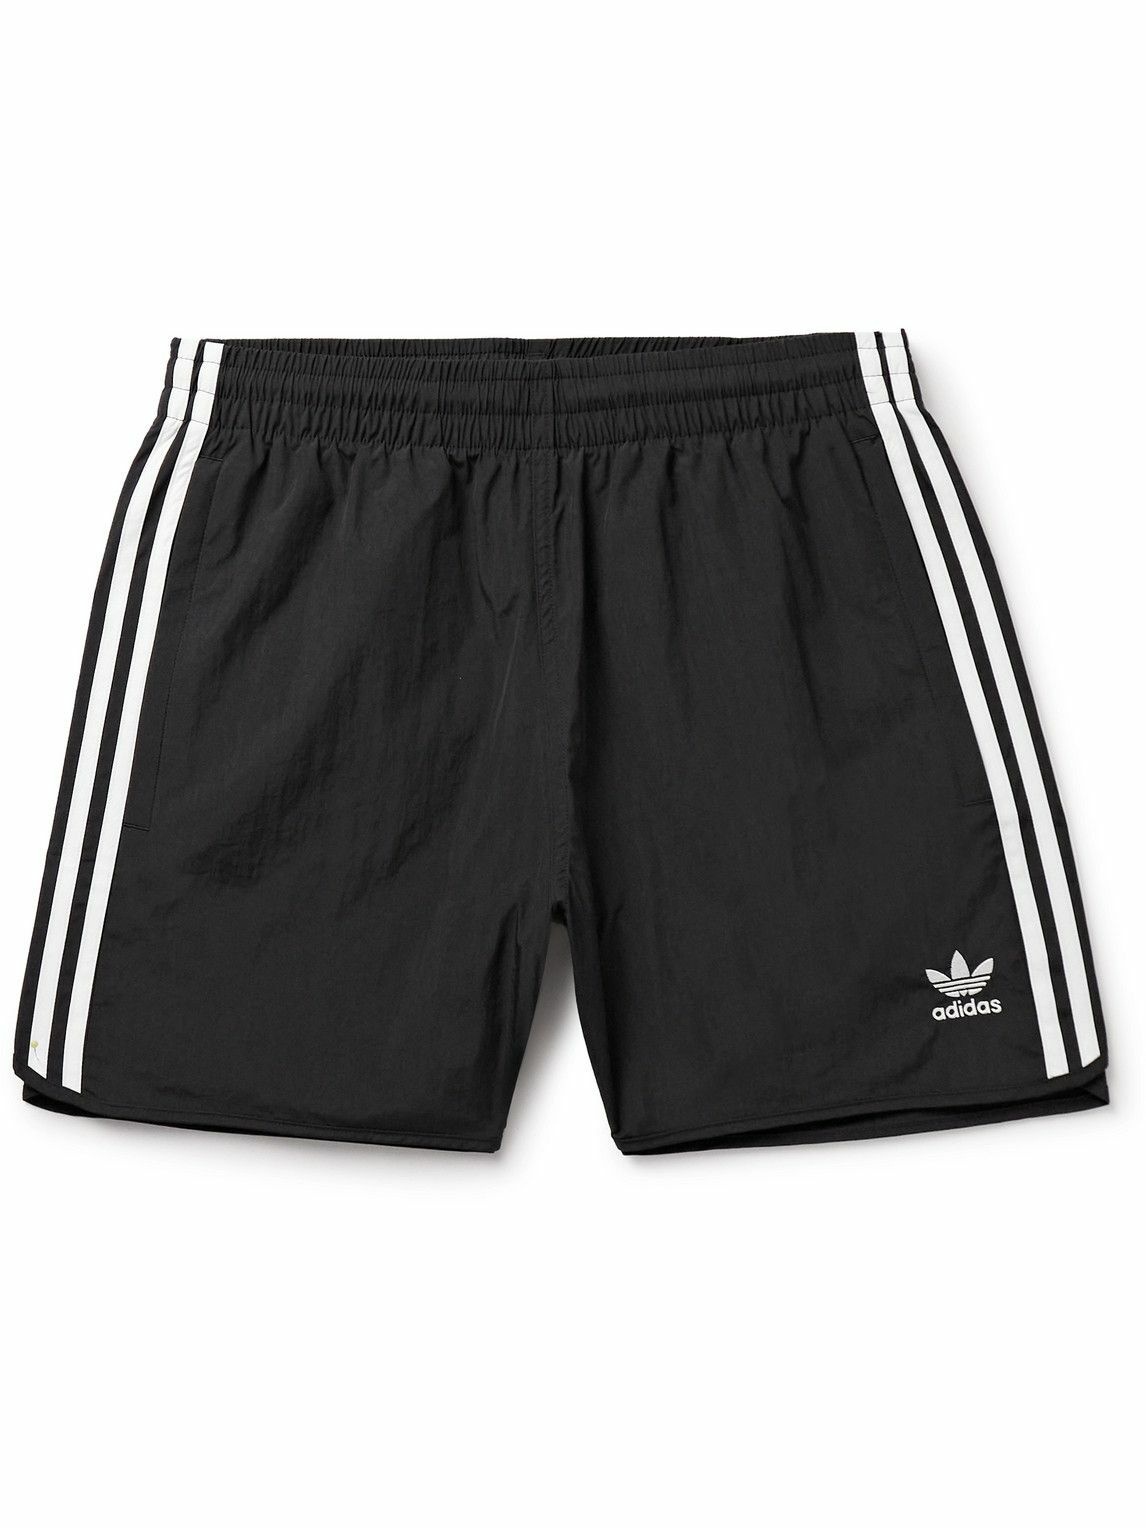 adidas Originals Black and Pink 3D Trefoil 3-Stripe Sweat Shorts adidas  Originals